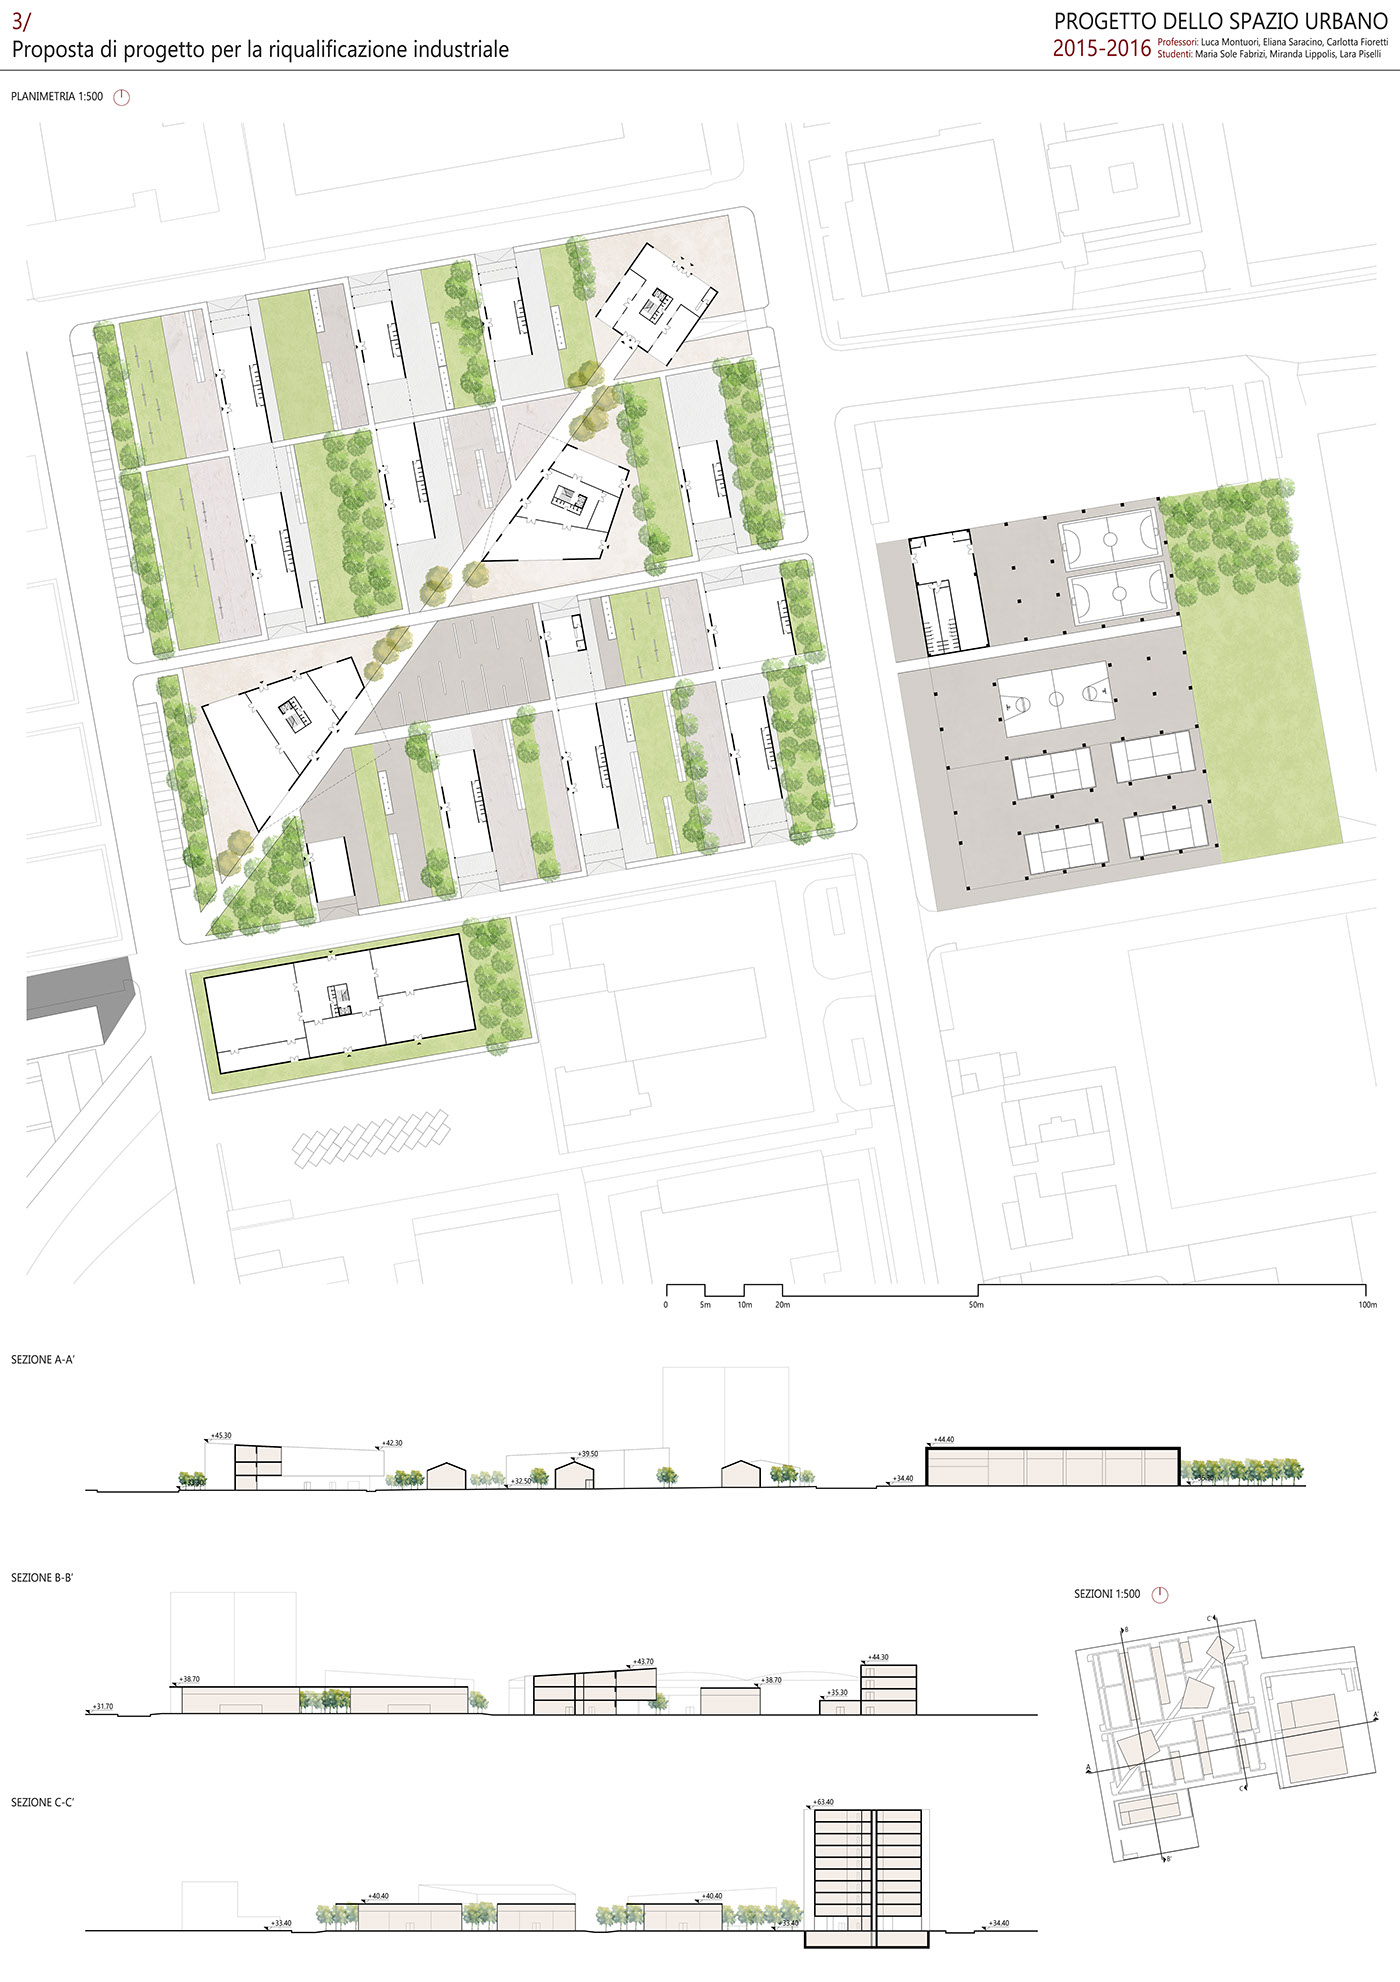 public space Tor Sapienza riqualification Urban Architecture fab lab Urban Project